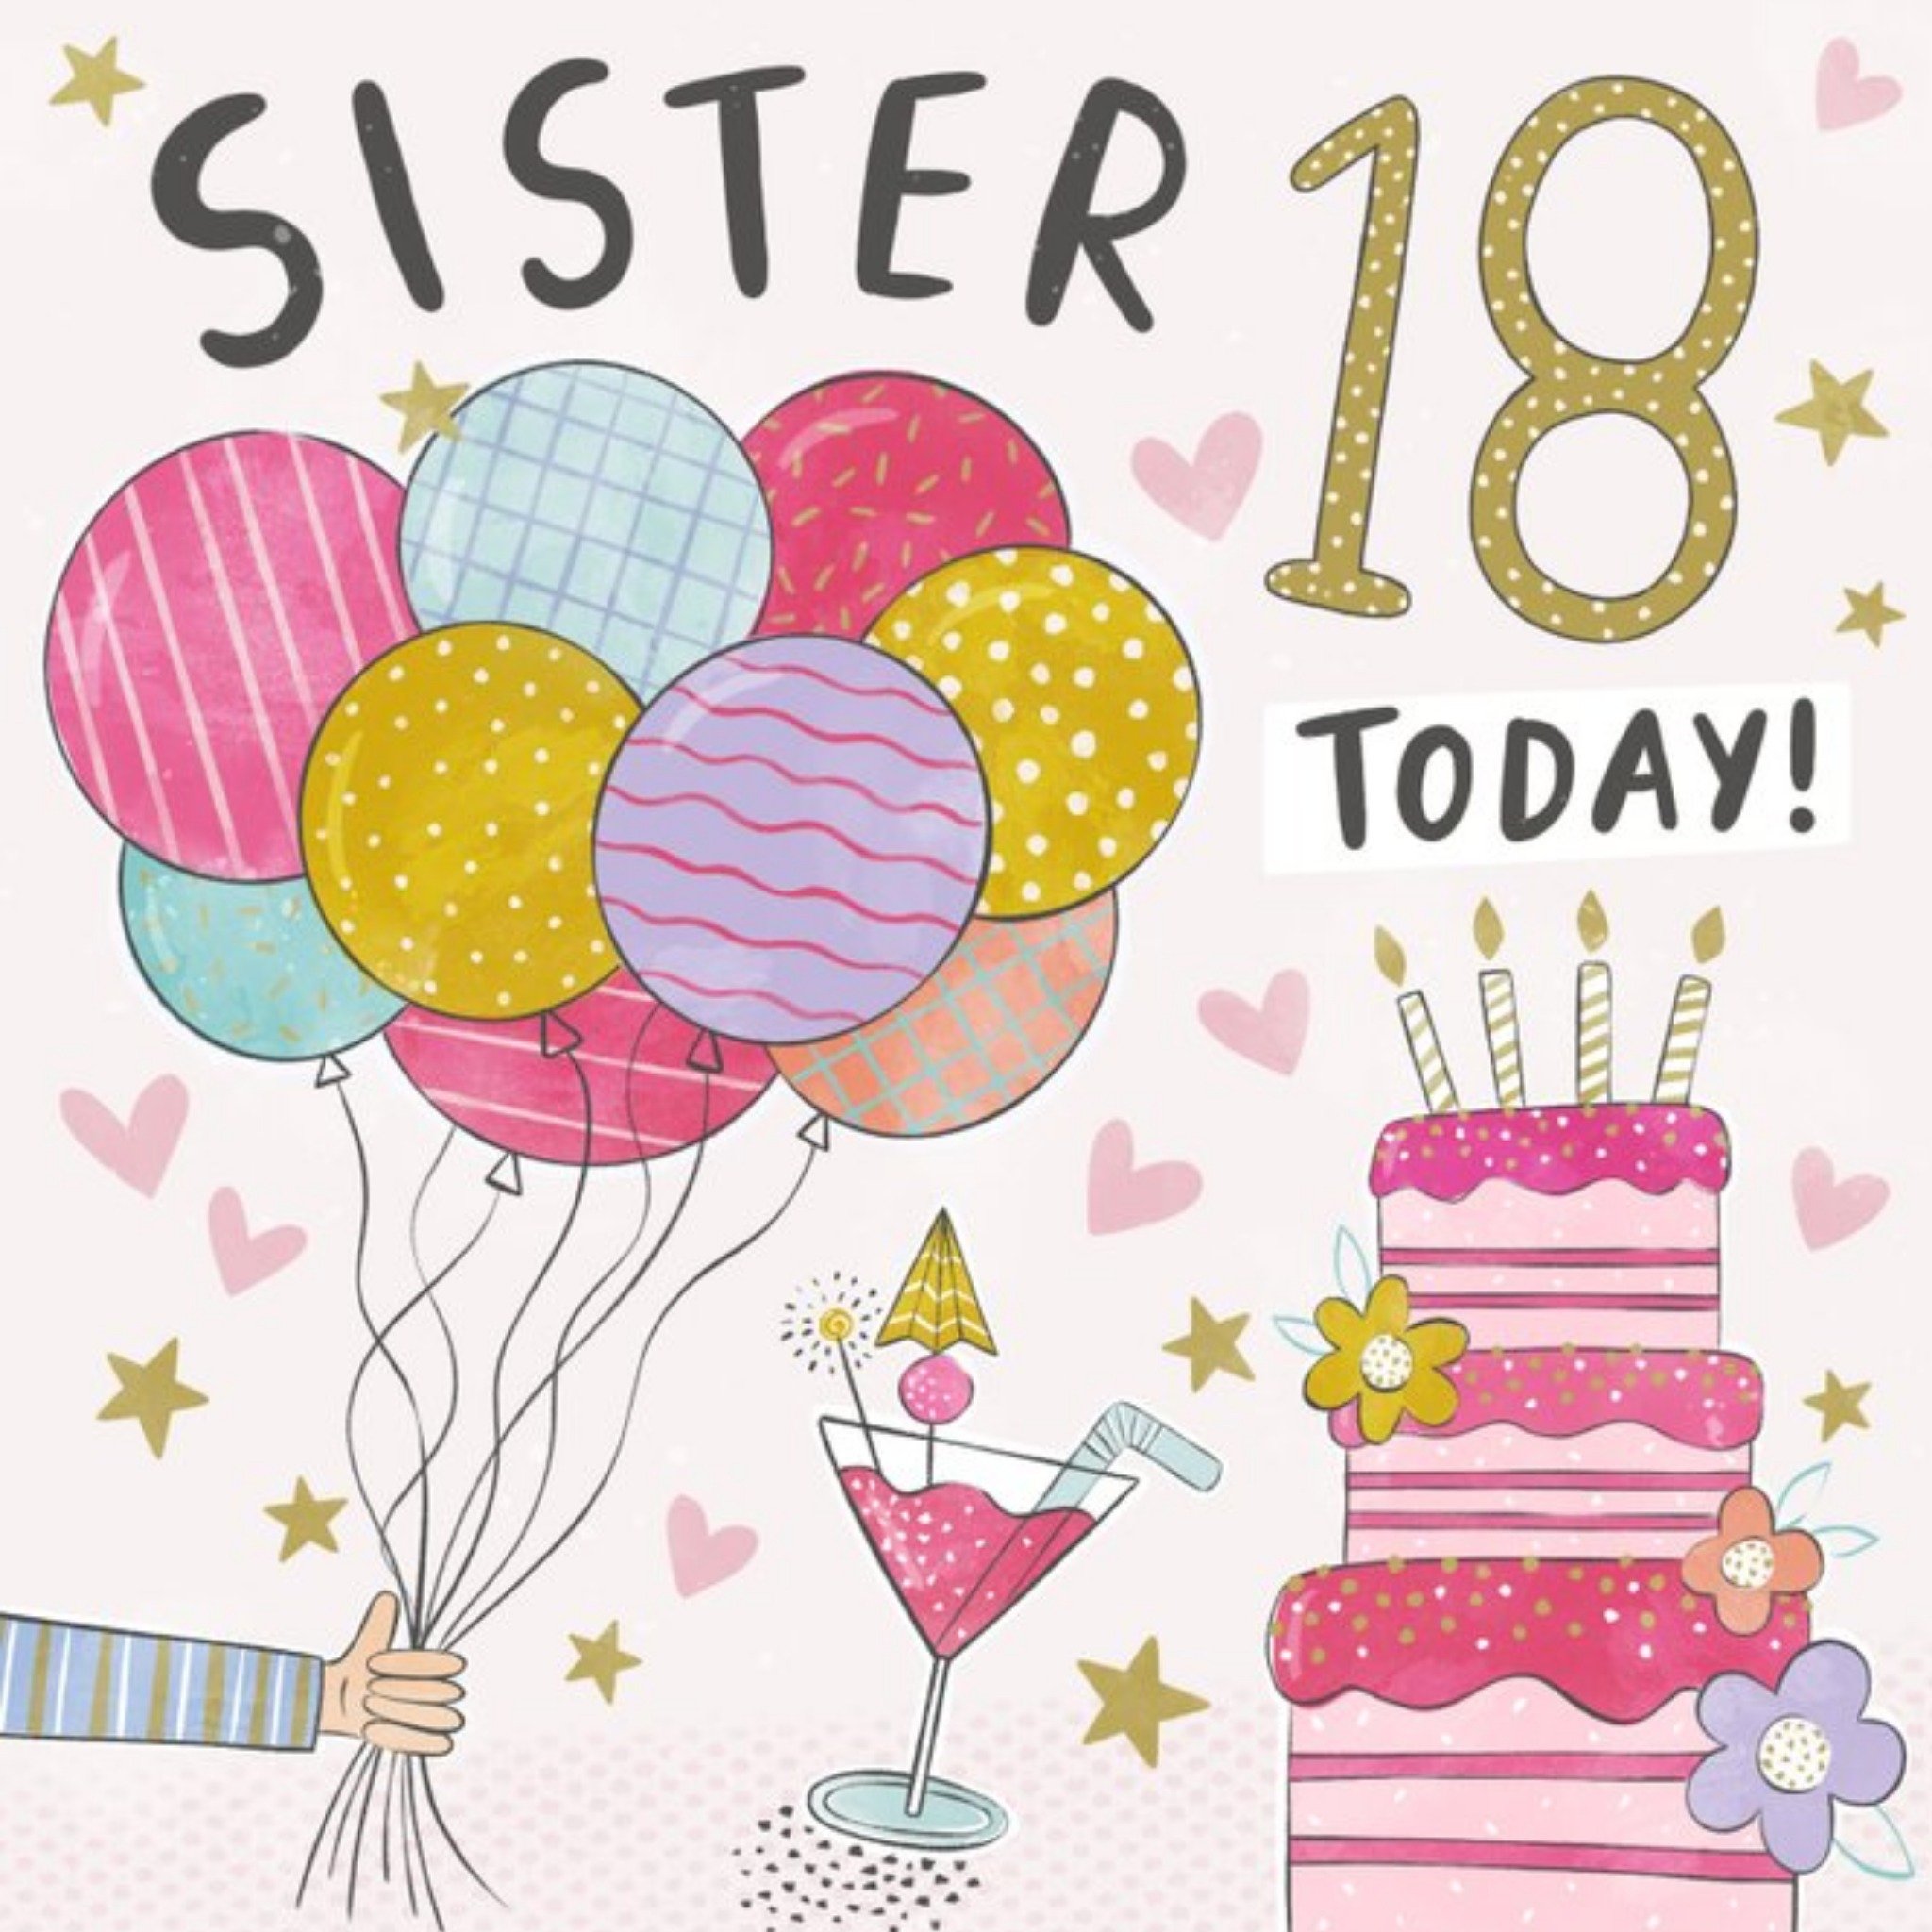 Moonpig Fun Cute Illustration Sister 18 Today Birthday Card, Square